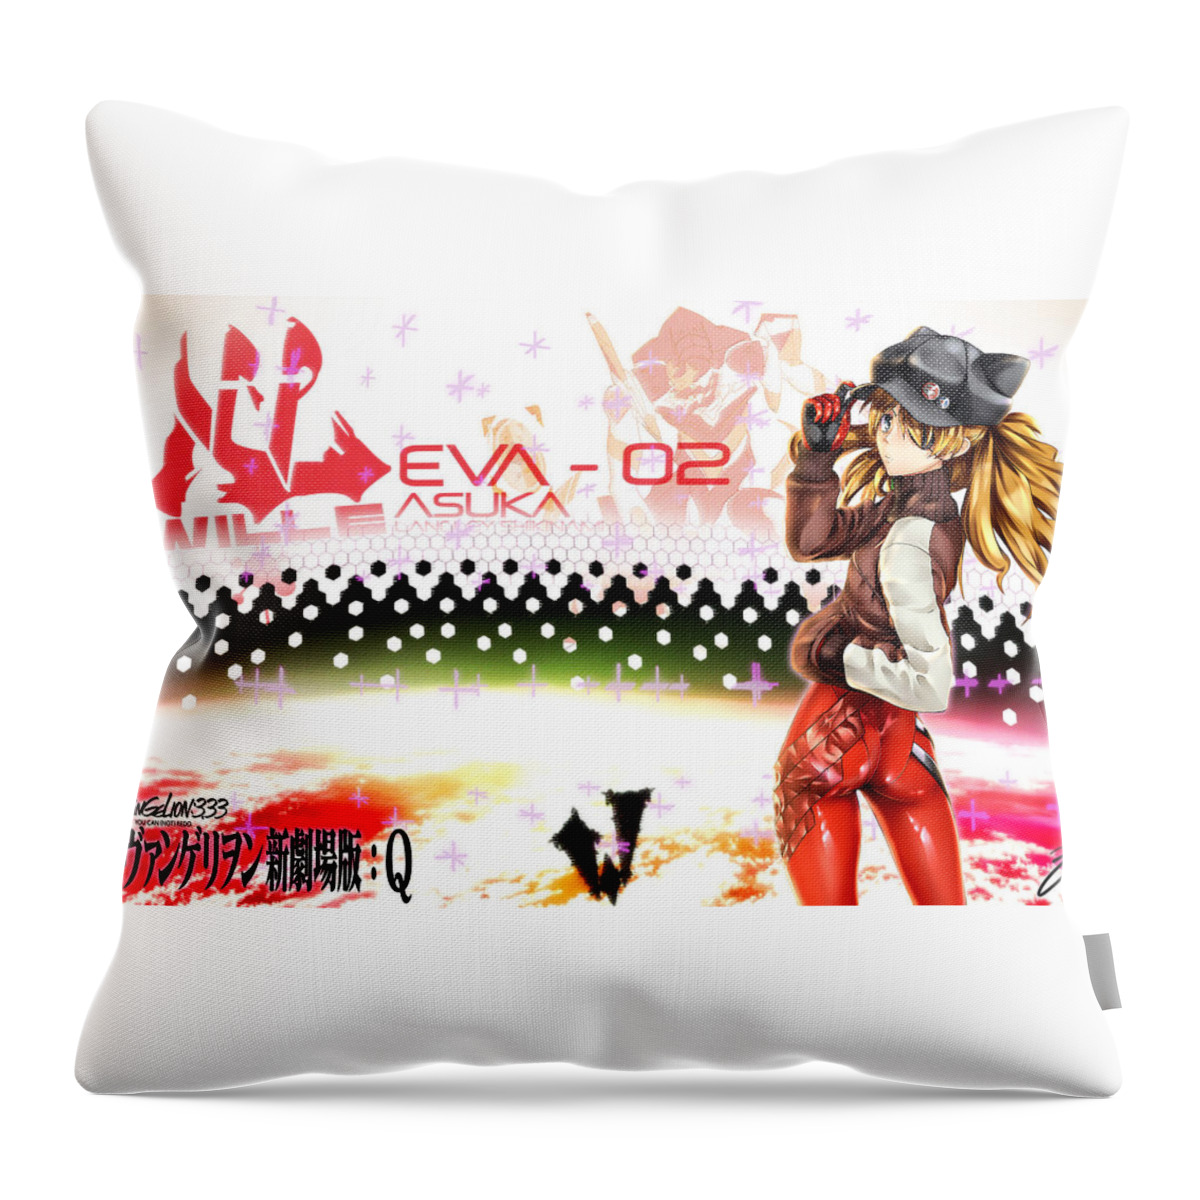 Neon Genesis Evangelion Throw Pillow featuring the digital art Neon Genesis Evangelion by Maye Loeser